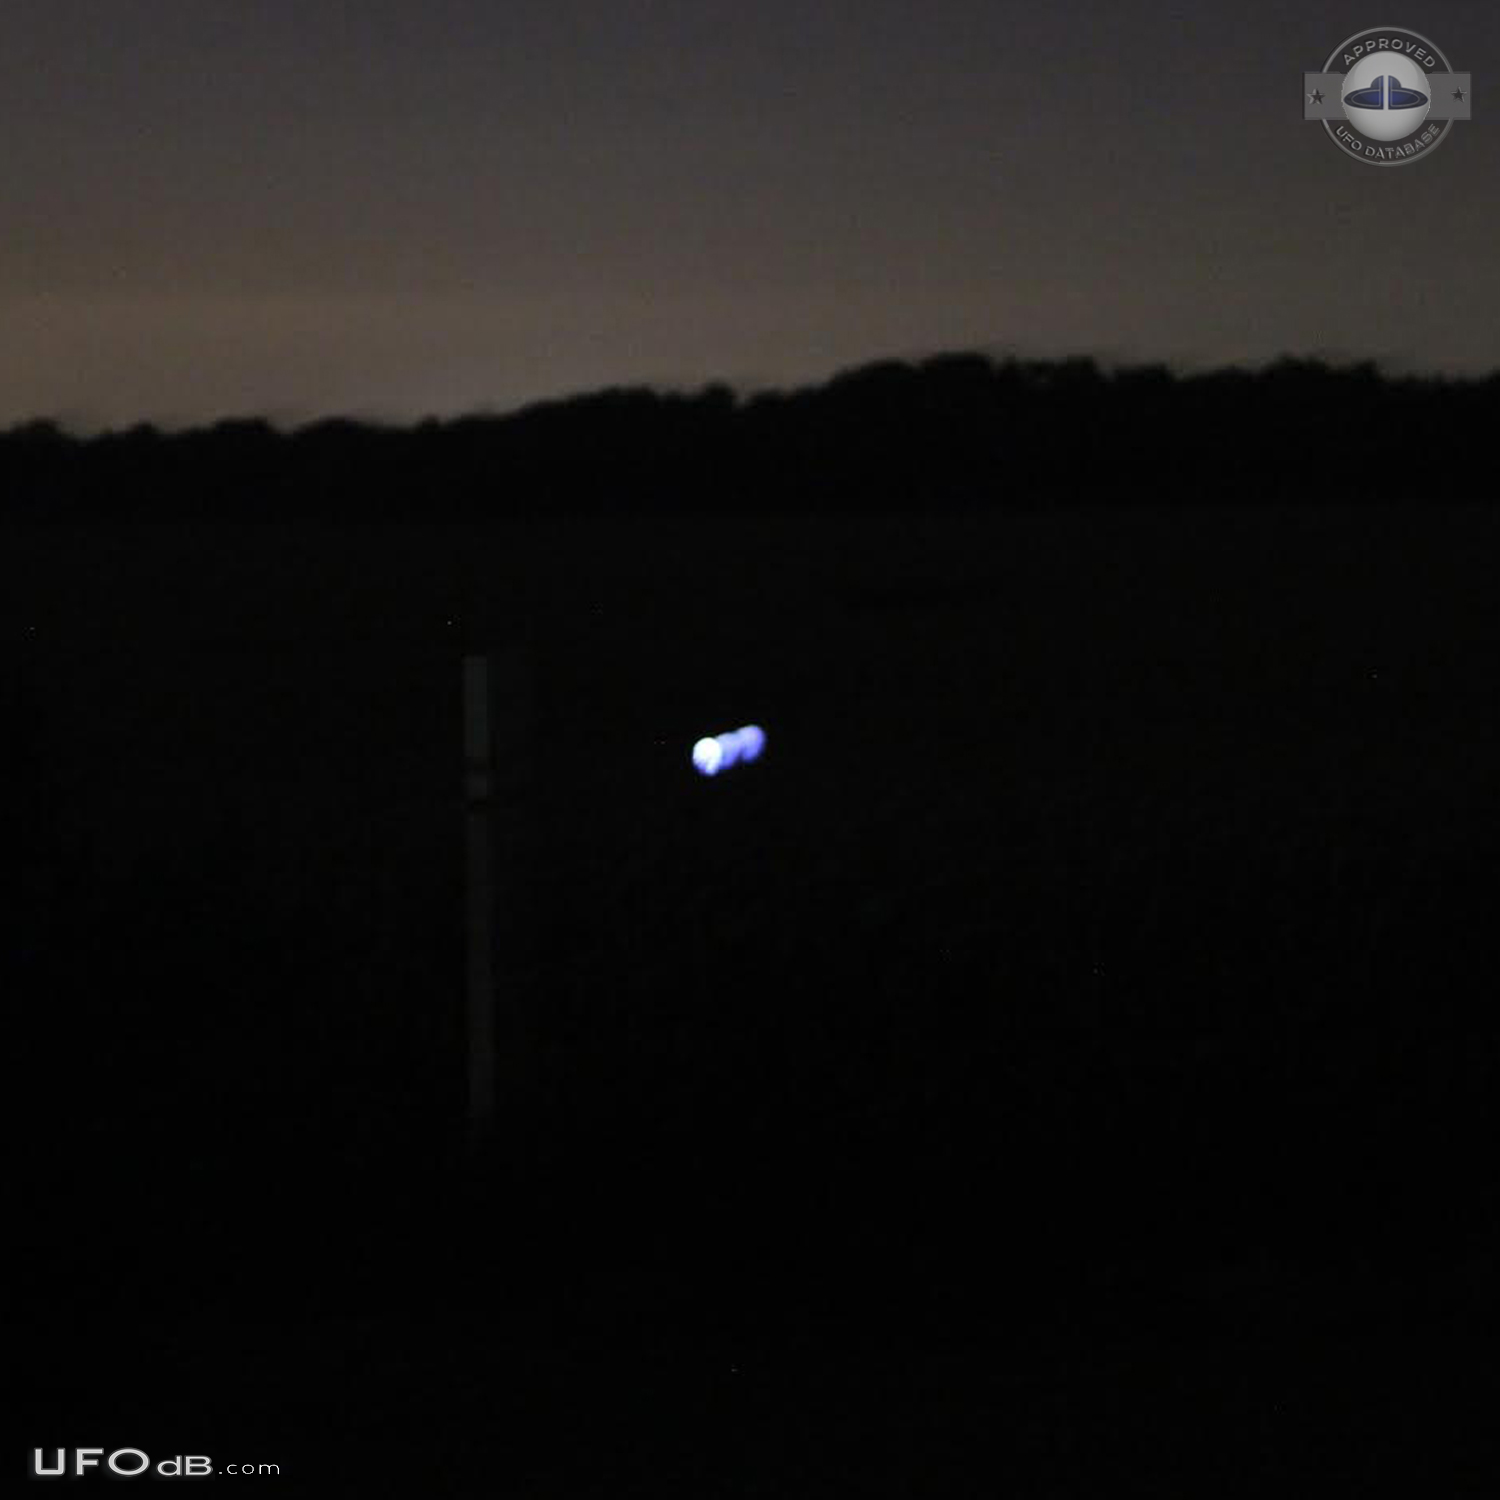 Floating blinking light UFO in the corn field - Lebanon Ohio USA 2014 UFO Picture #690-2